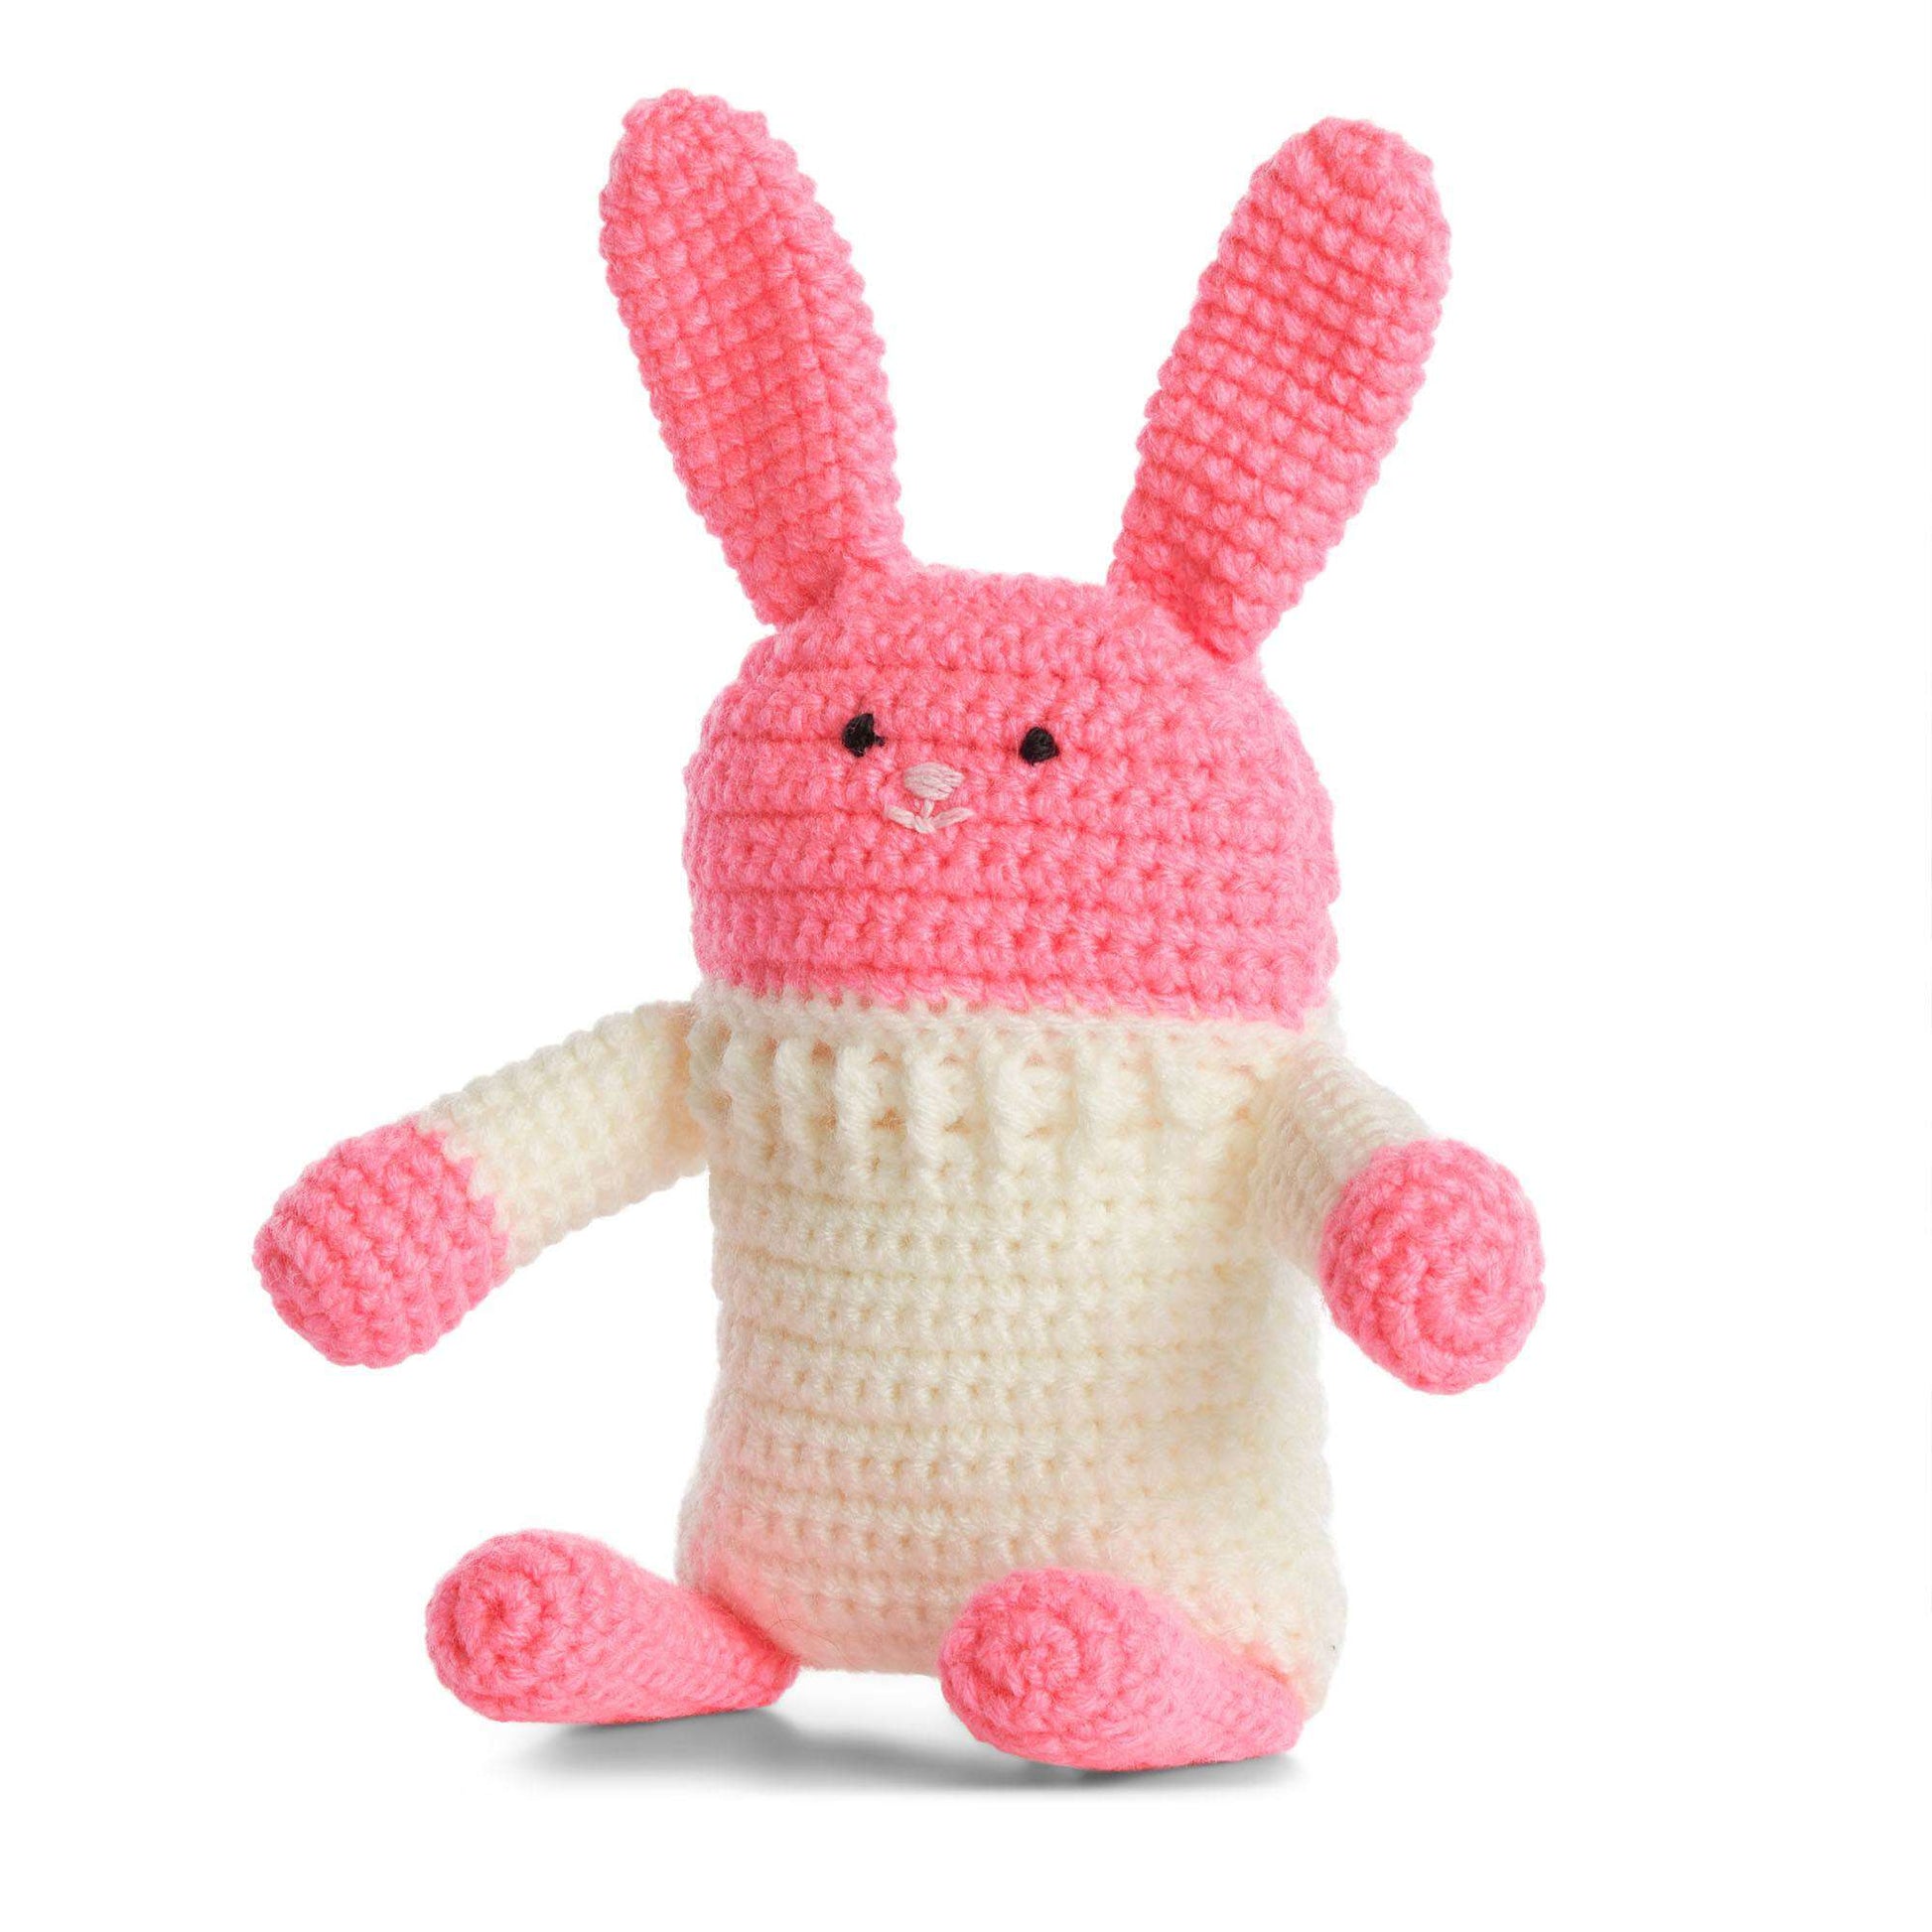 Free Red Heart Crochet Funny Bunny Pattern